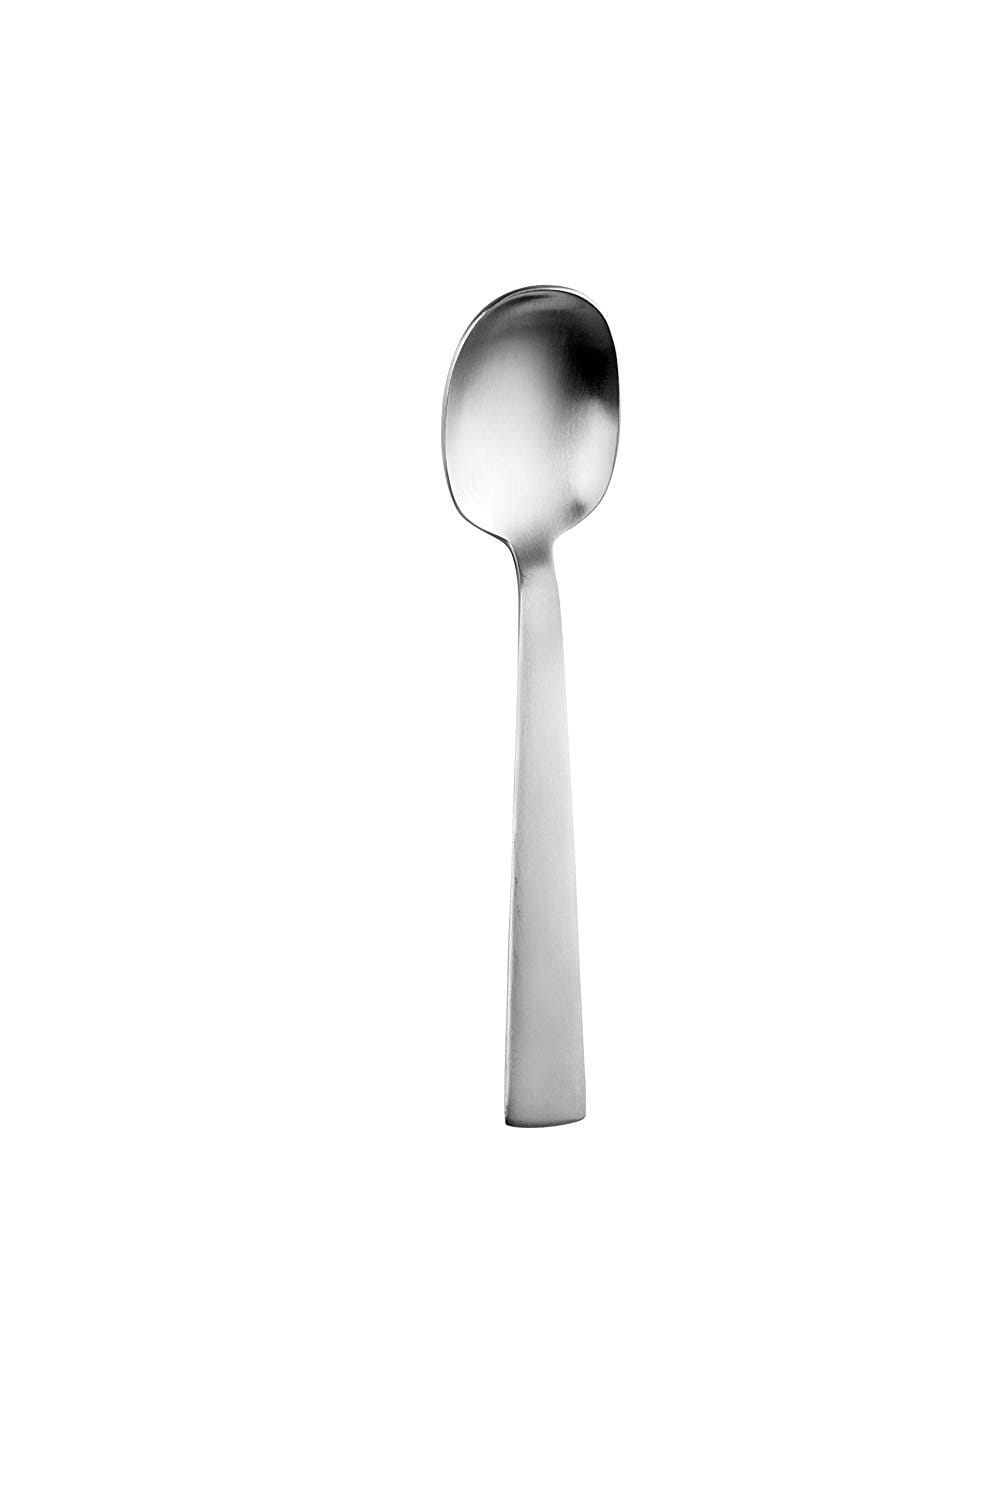 Sanjeev Kapoor Satin Stainless Steel Spoon Set, 6-Pieces | Spoon